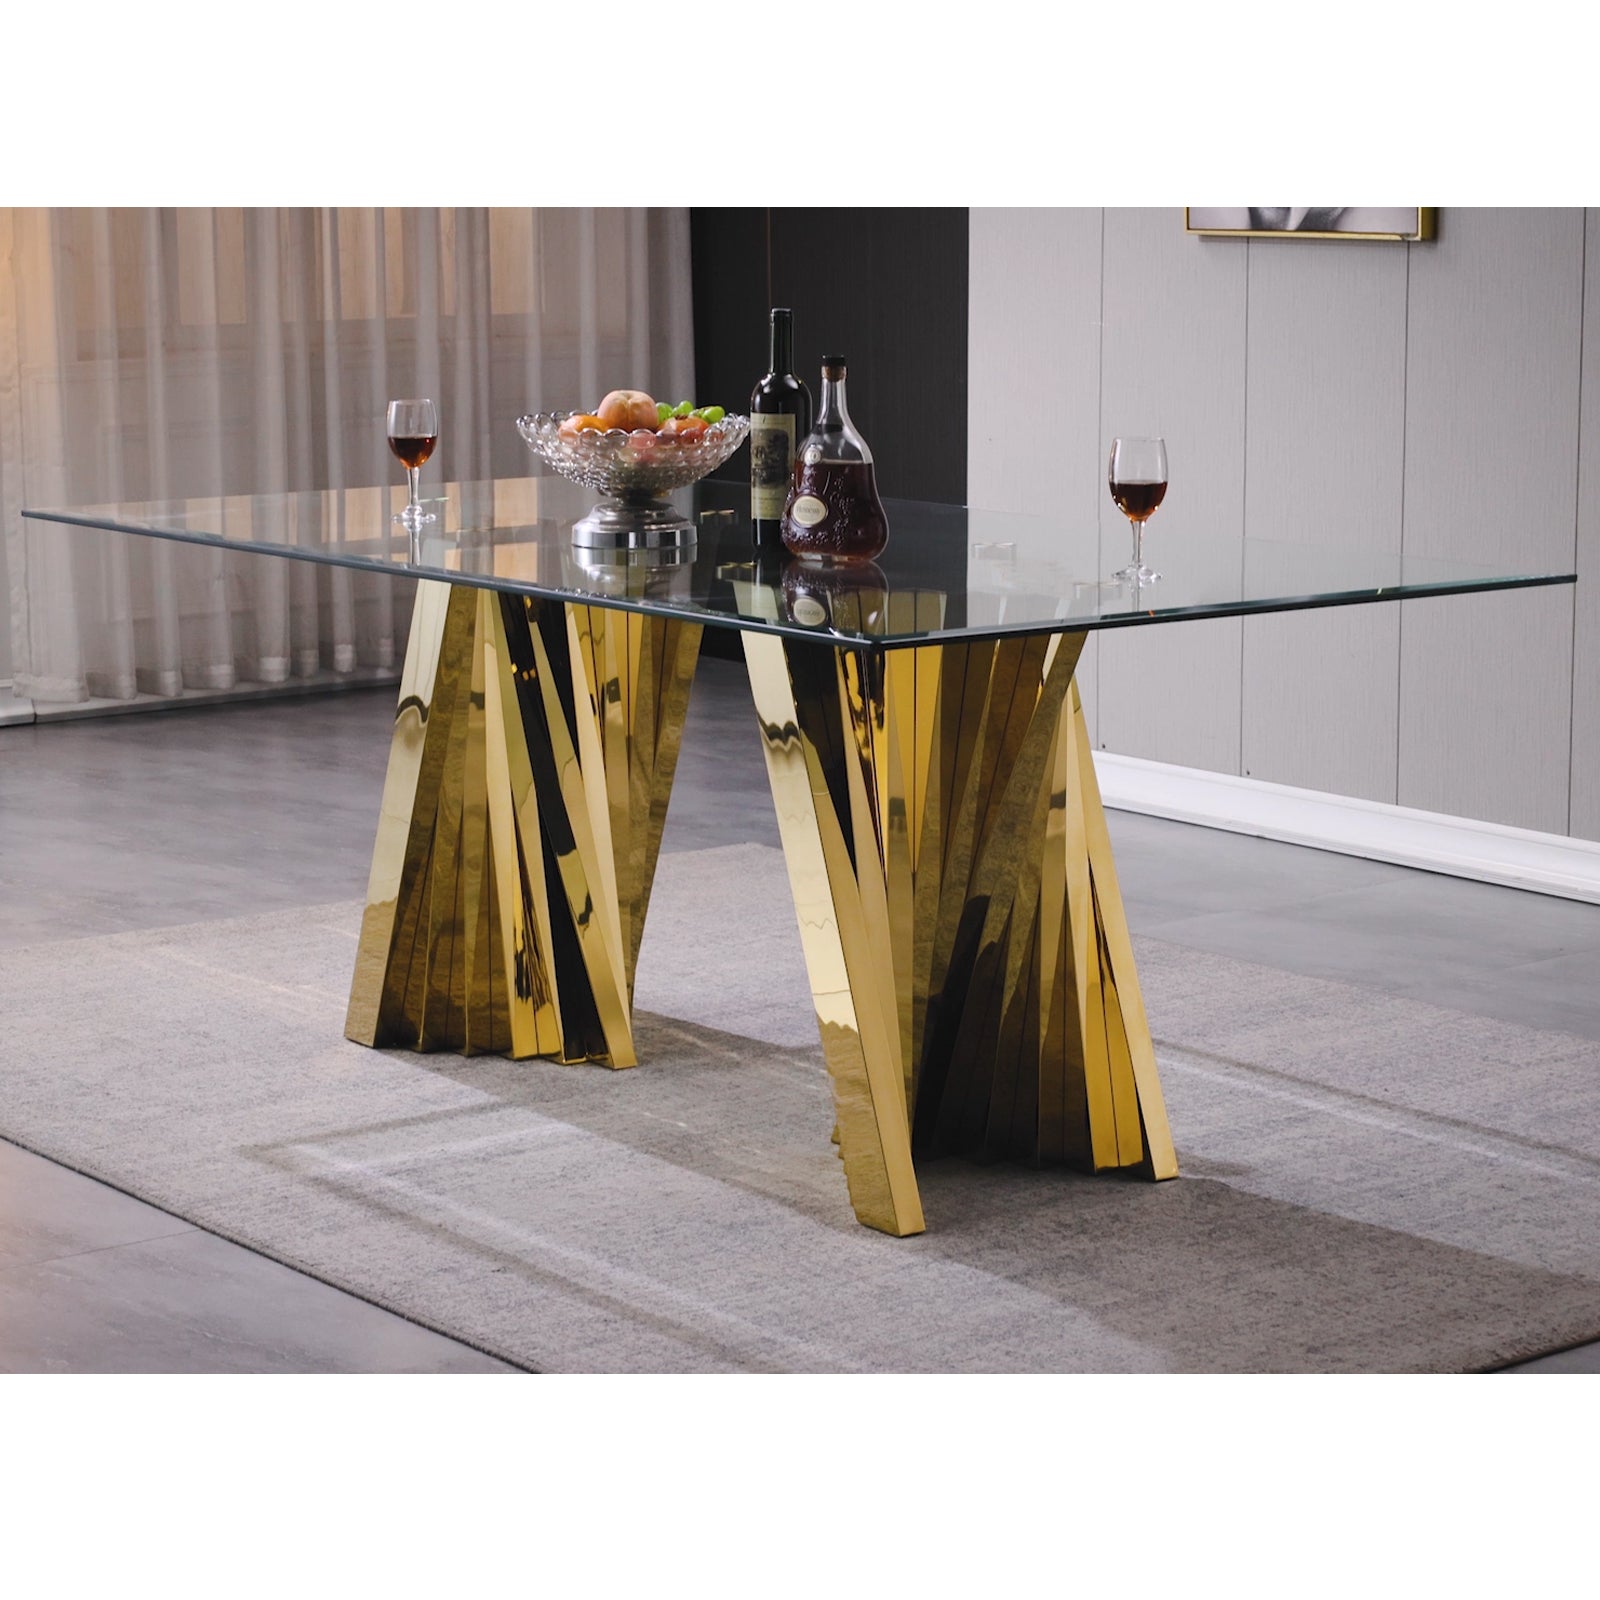 665-Set | AUZ Glass Dining room Sets for 6